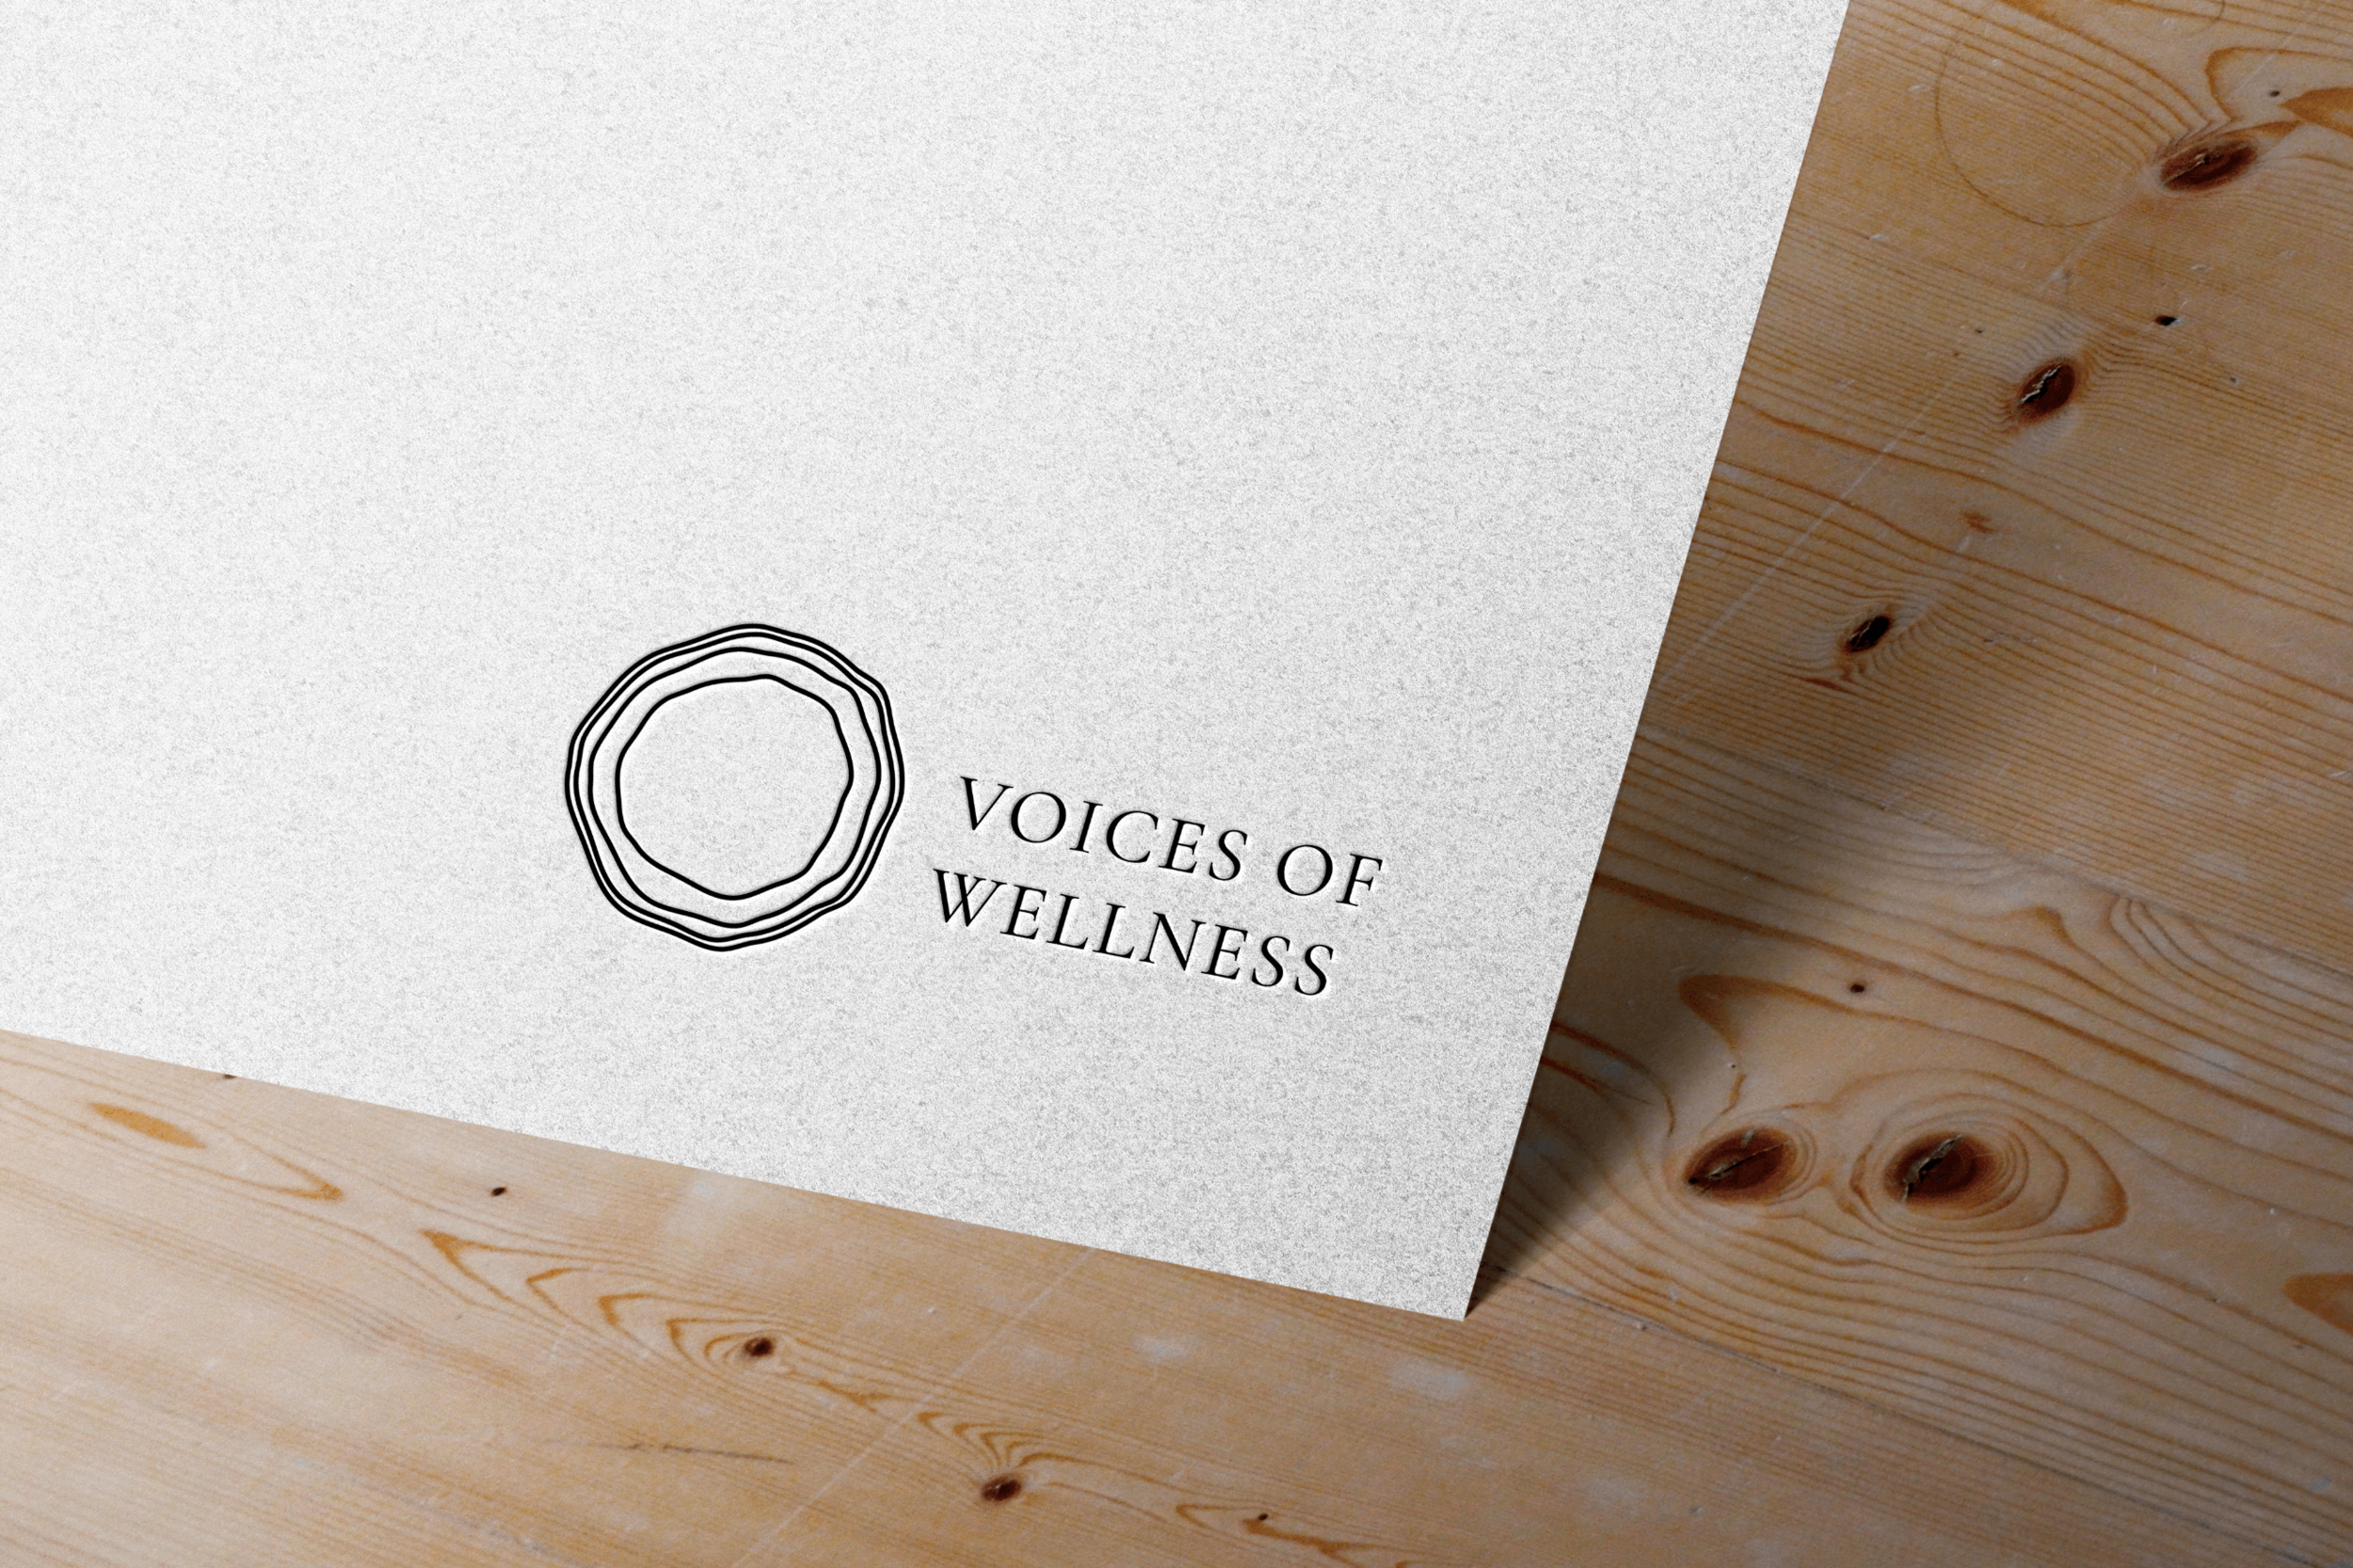 voicesofwellness-logo-wood-mockup.png